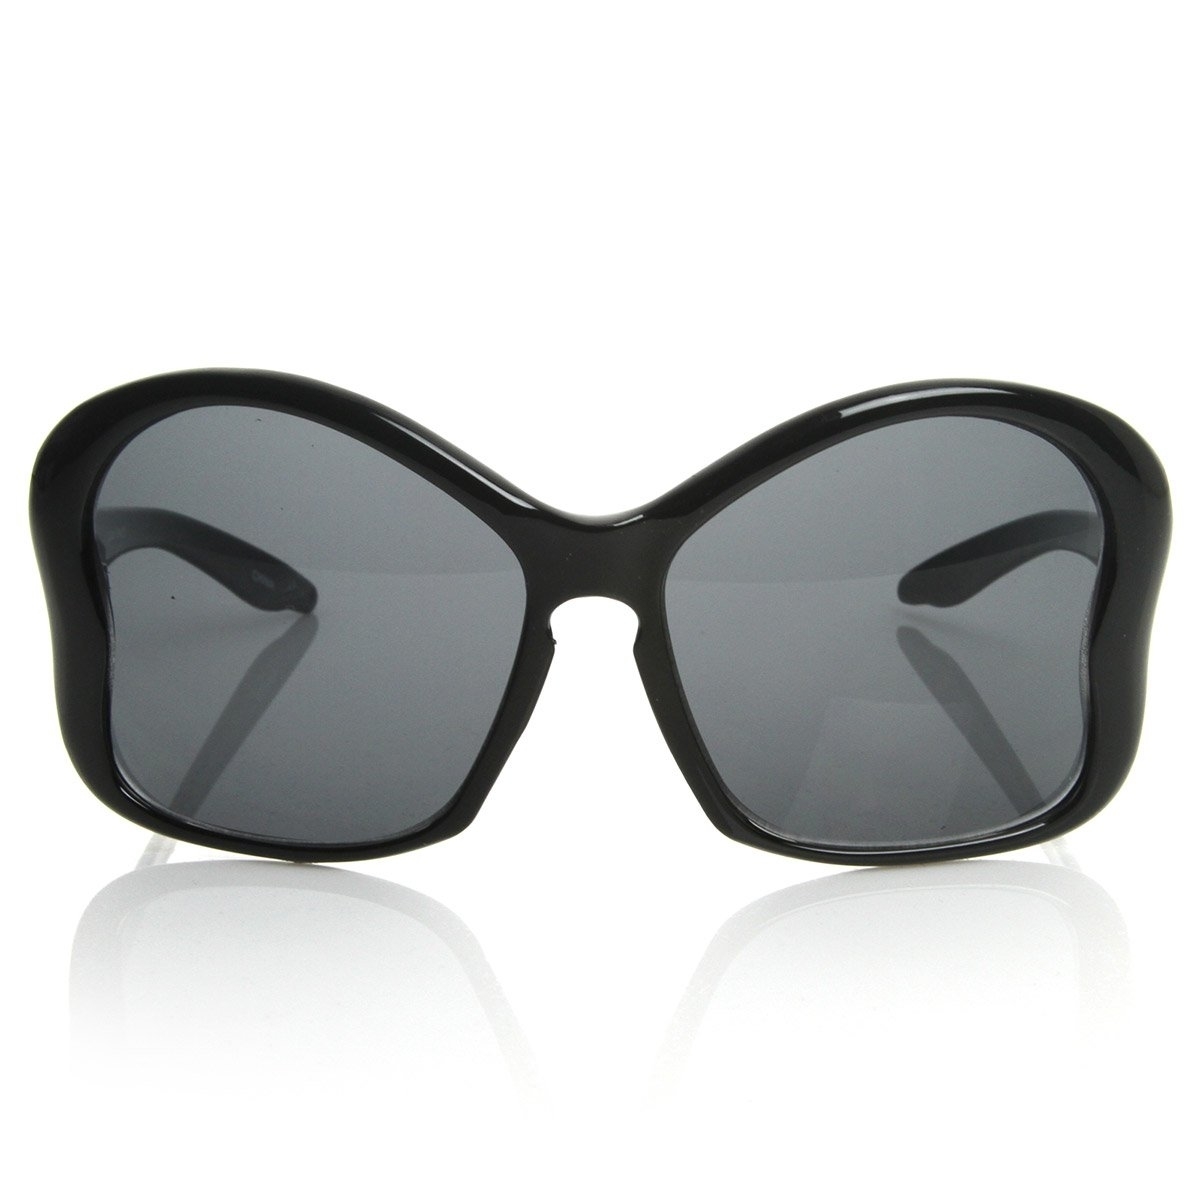 Womens Fashion Large Butterfly Shaped Oversized Sunglasses W/ Key Hole Bridge - Black Smoke